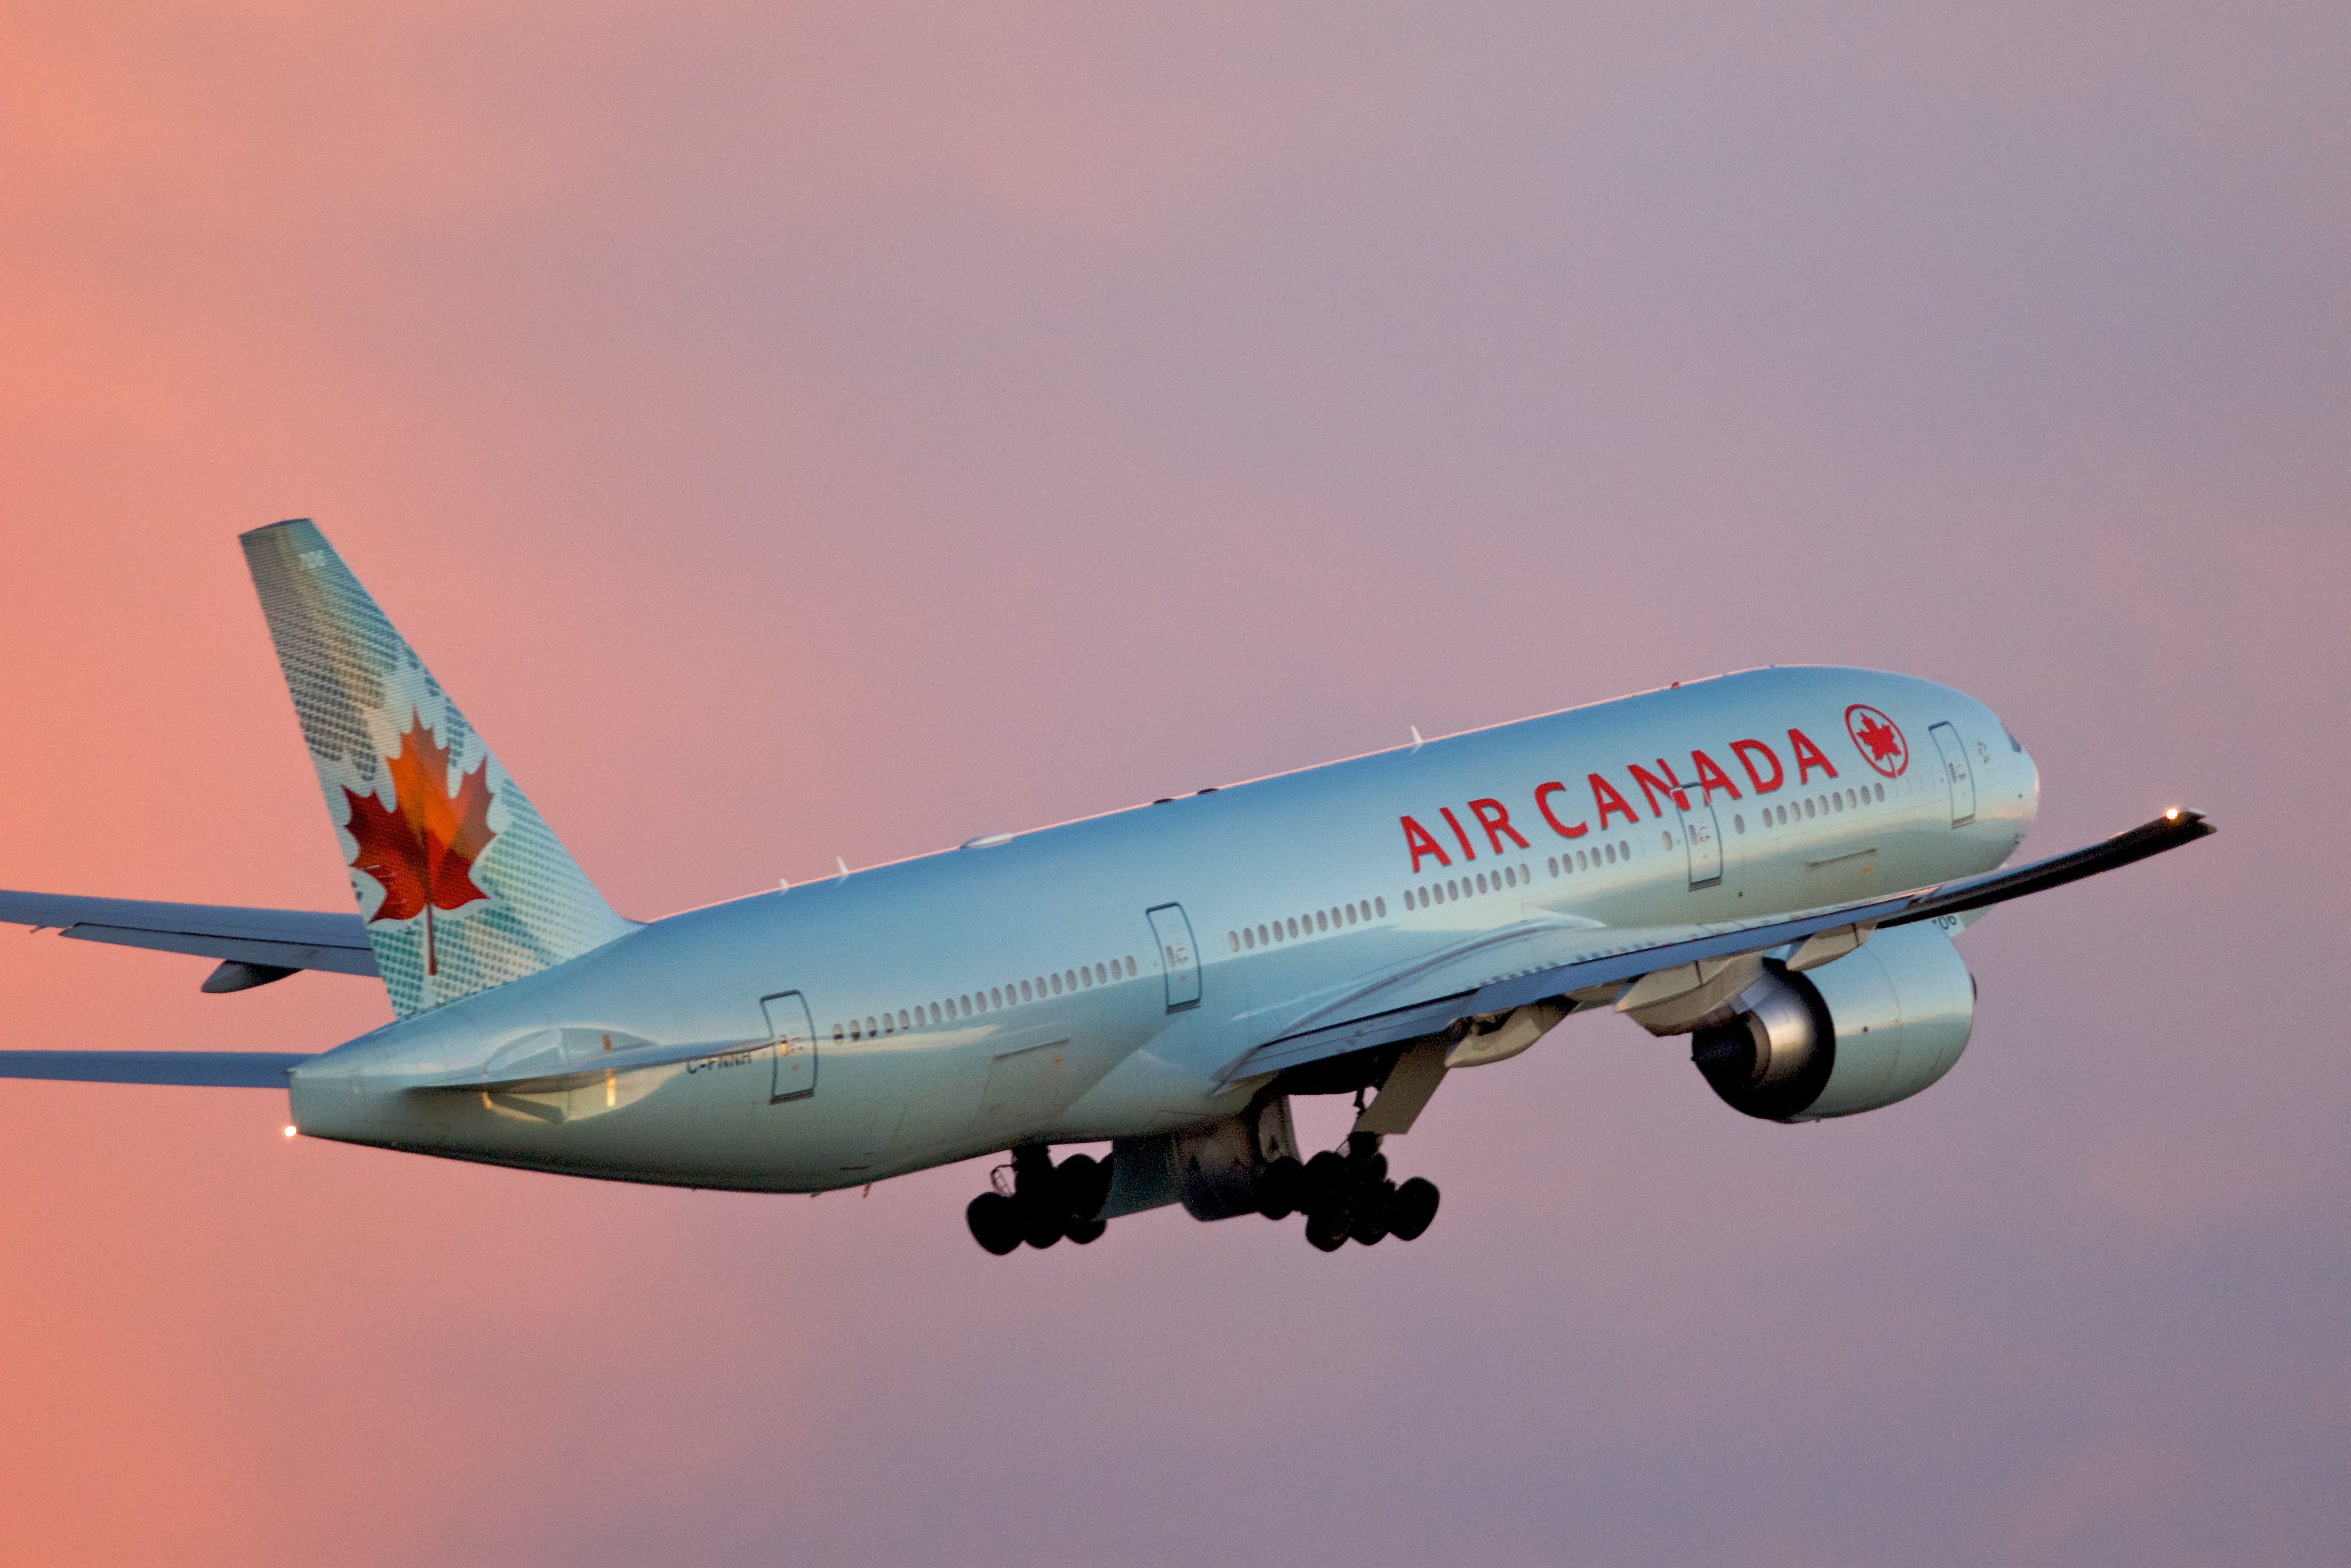 File:Air Canada Boeing 777-200LR Toronto takeoff.jpg - Wikimedia Commons